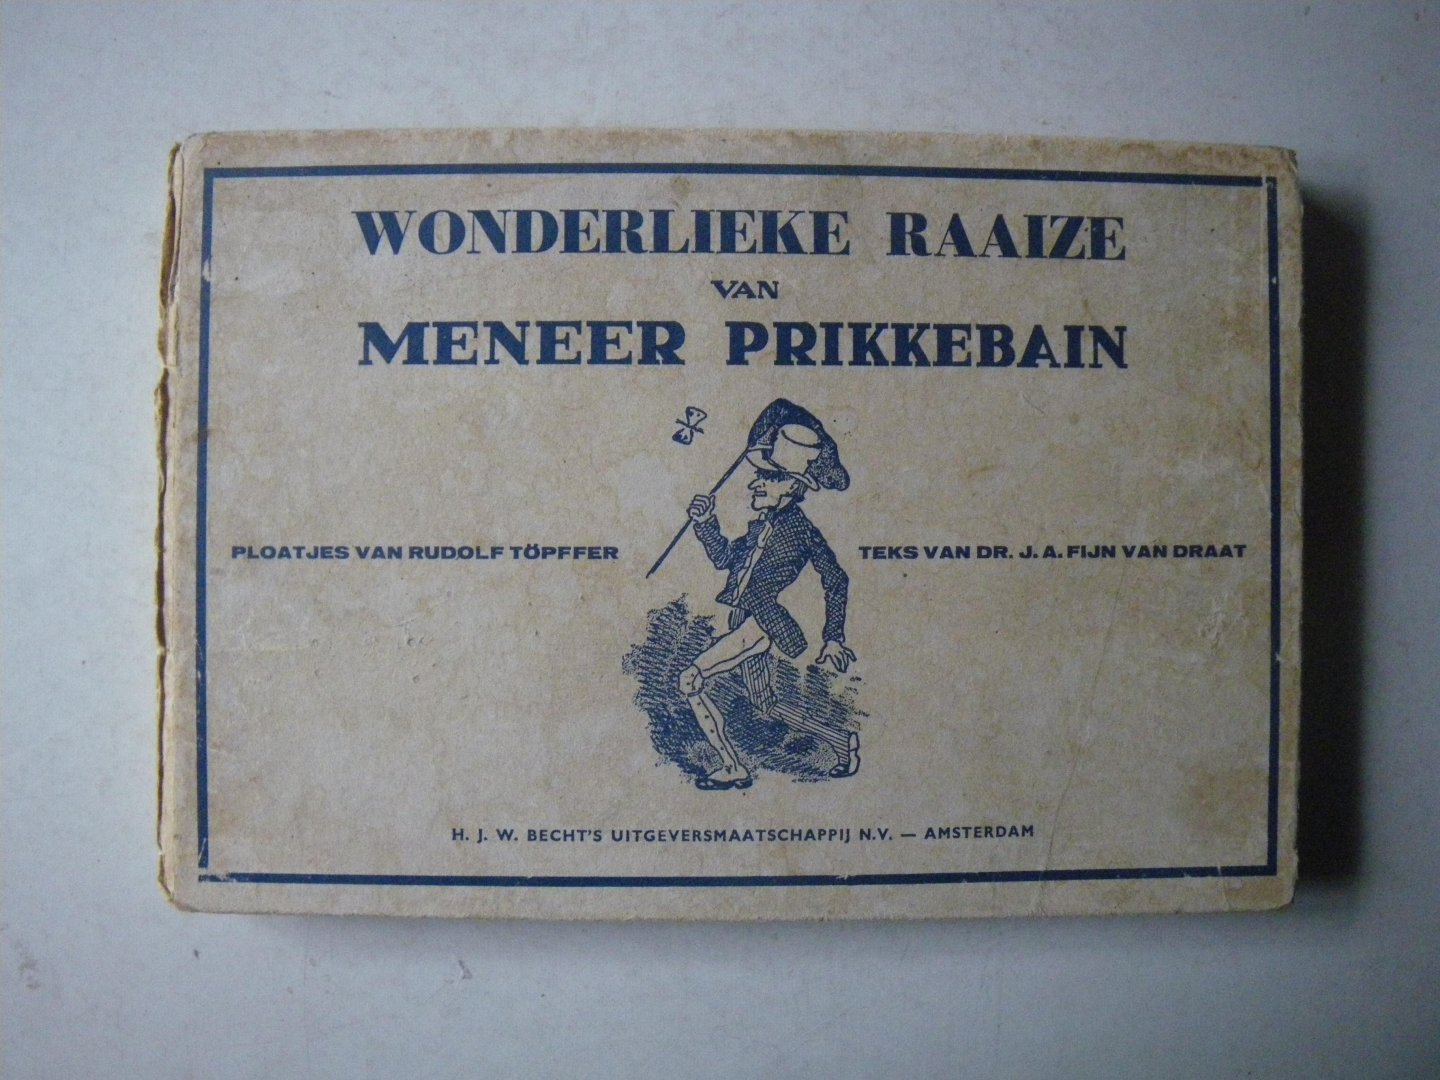 Topffer, Rudolf (plaatjes), Fijn van Draat, J.A. (Tekst) - Wonderlieke Raaize van meneer Prikkebain